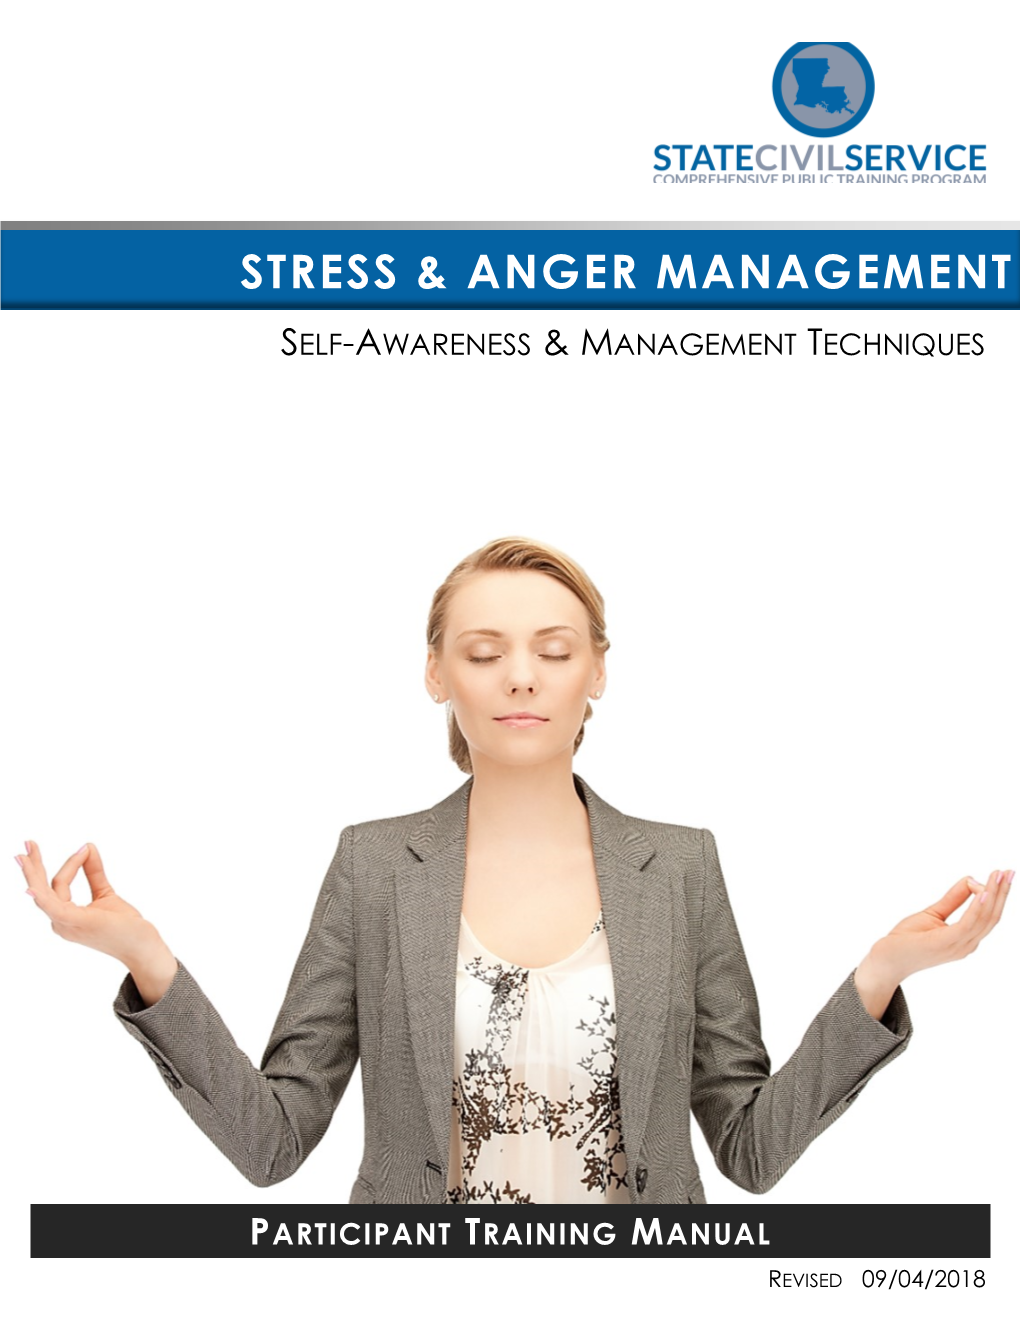 Stress & Anger Management